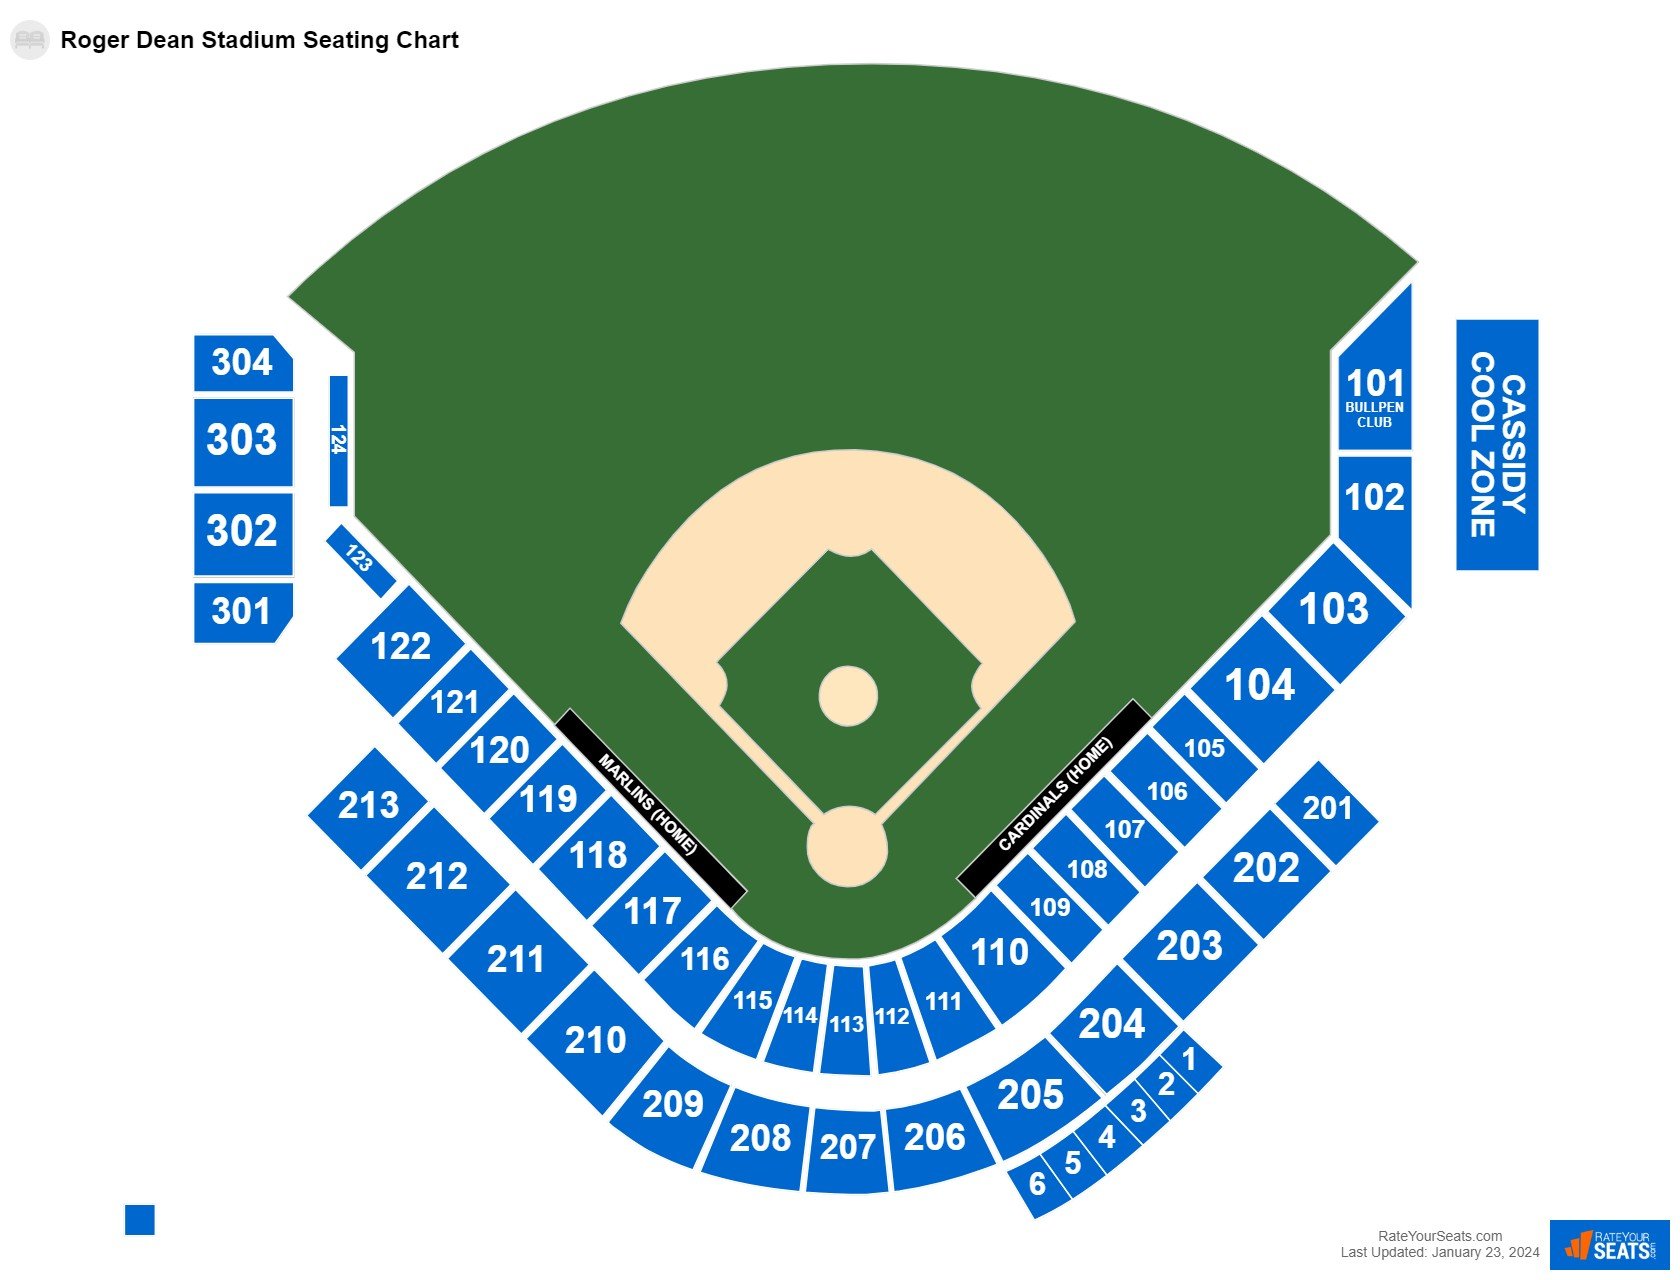 Baseball seating chart at Roger Dean Stadium